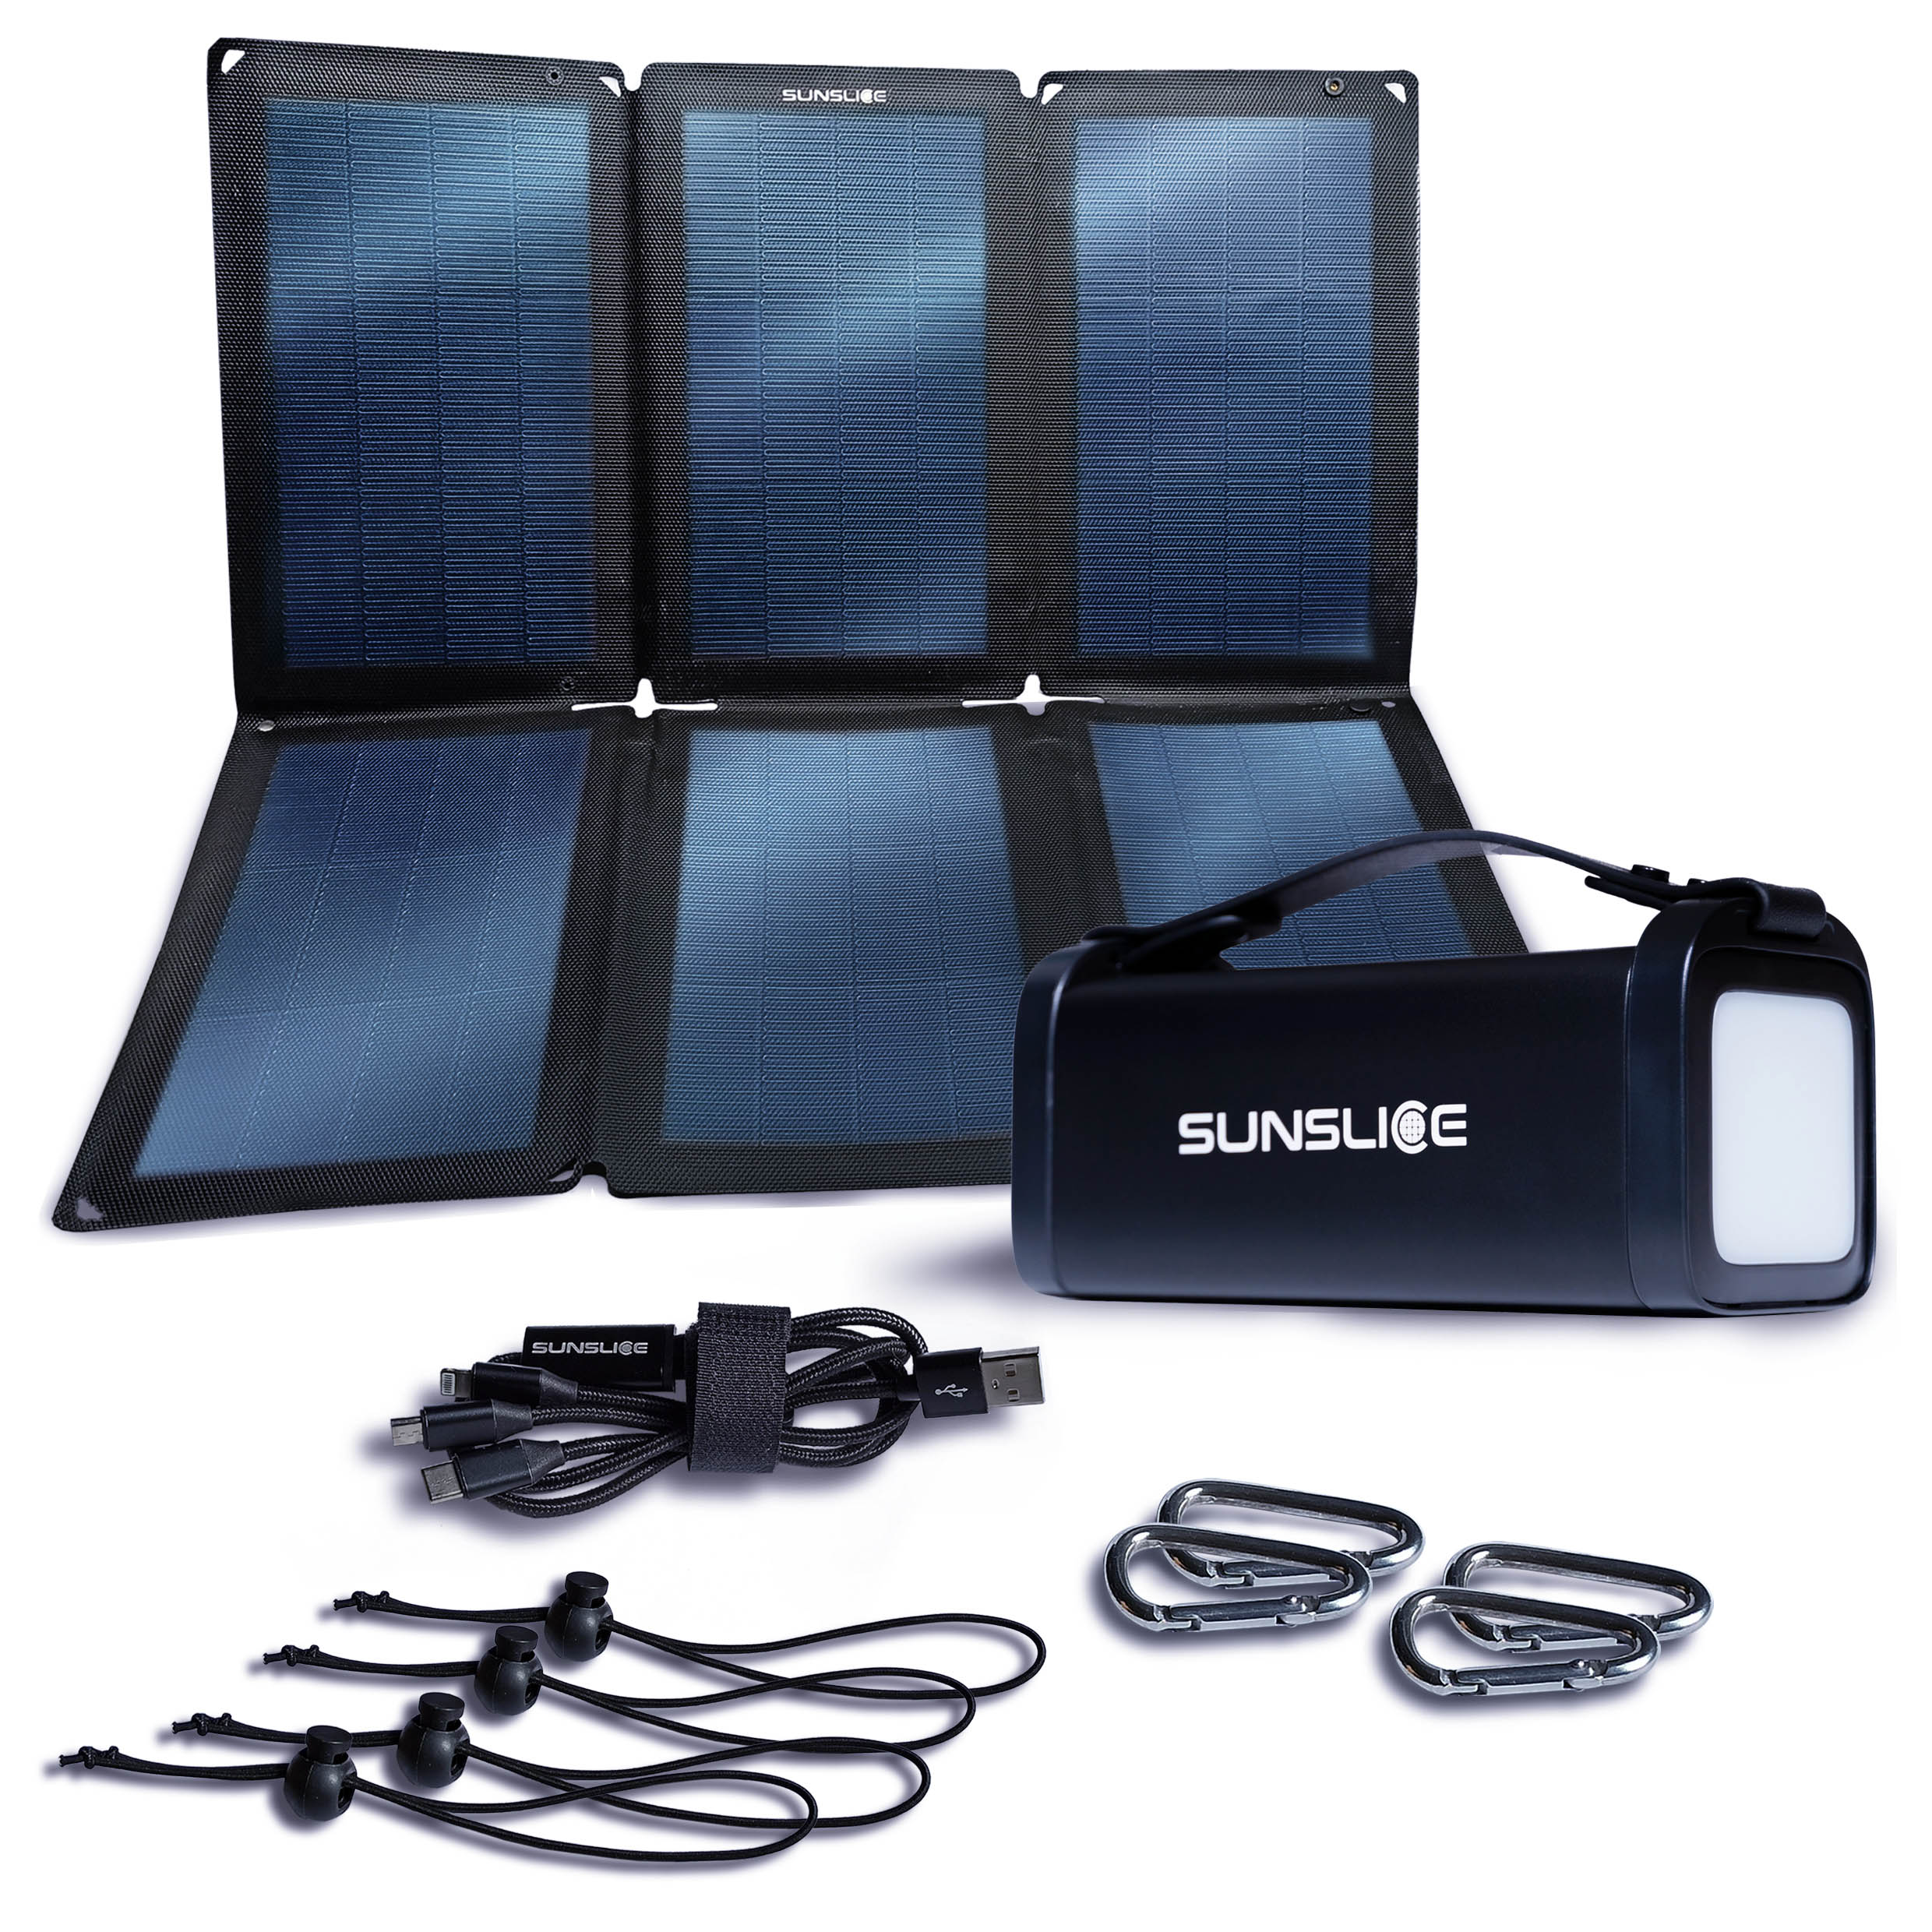 Fusion 150 Watts - Foldable and Portable Solar Panel